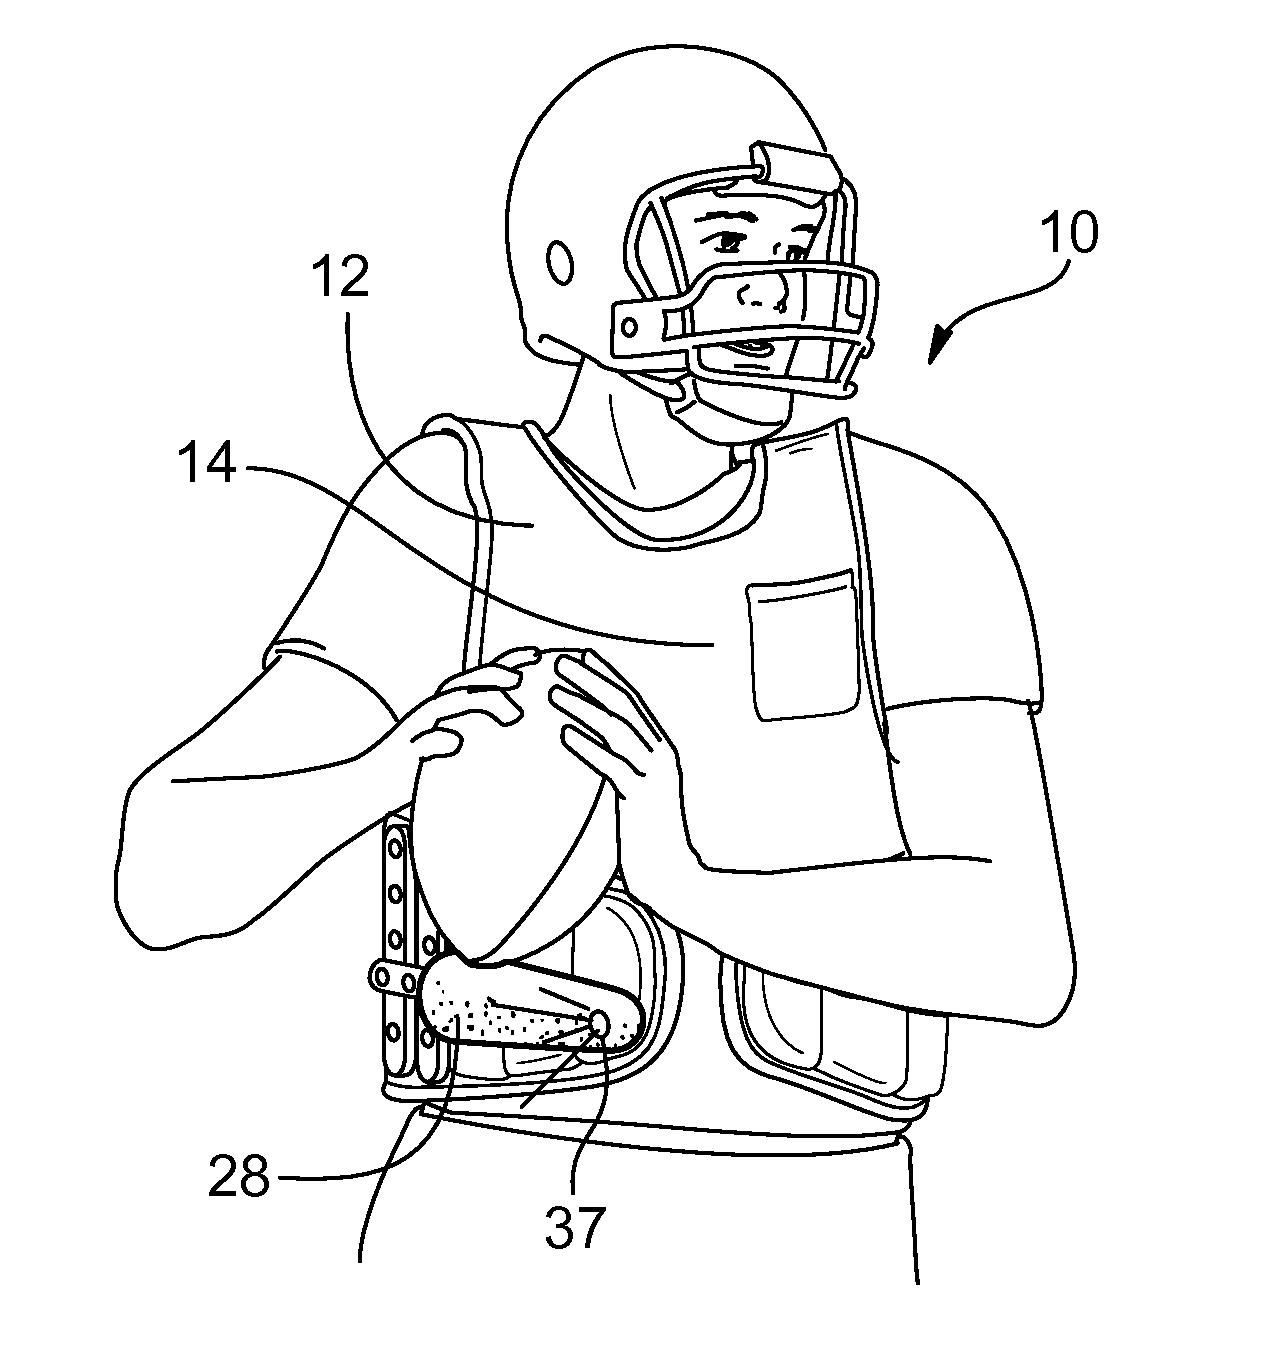 Football training device